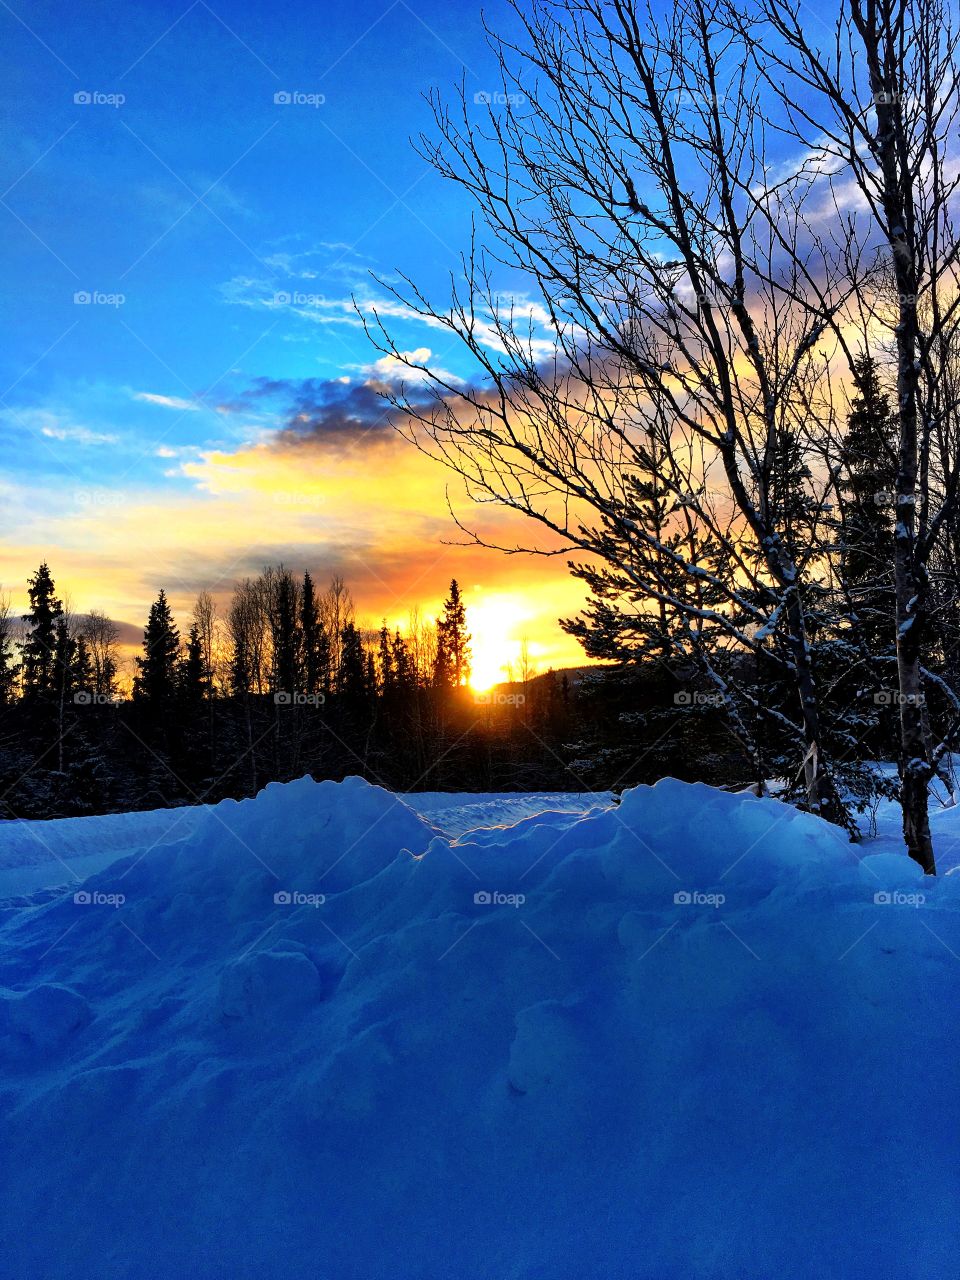 Sunset in snowy landscape